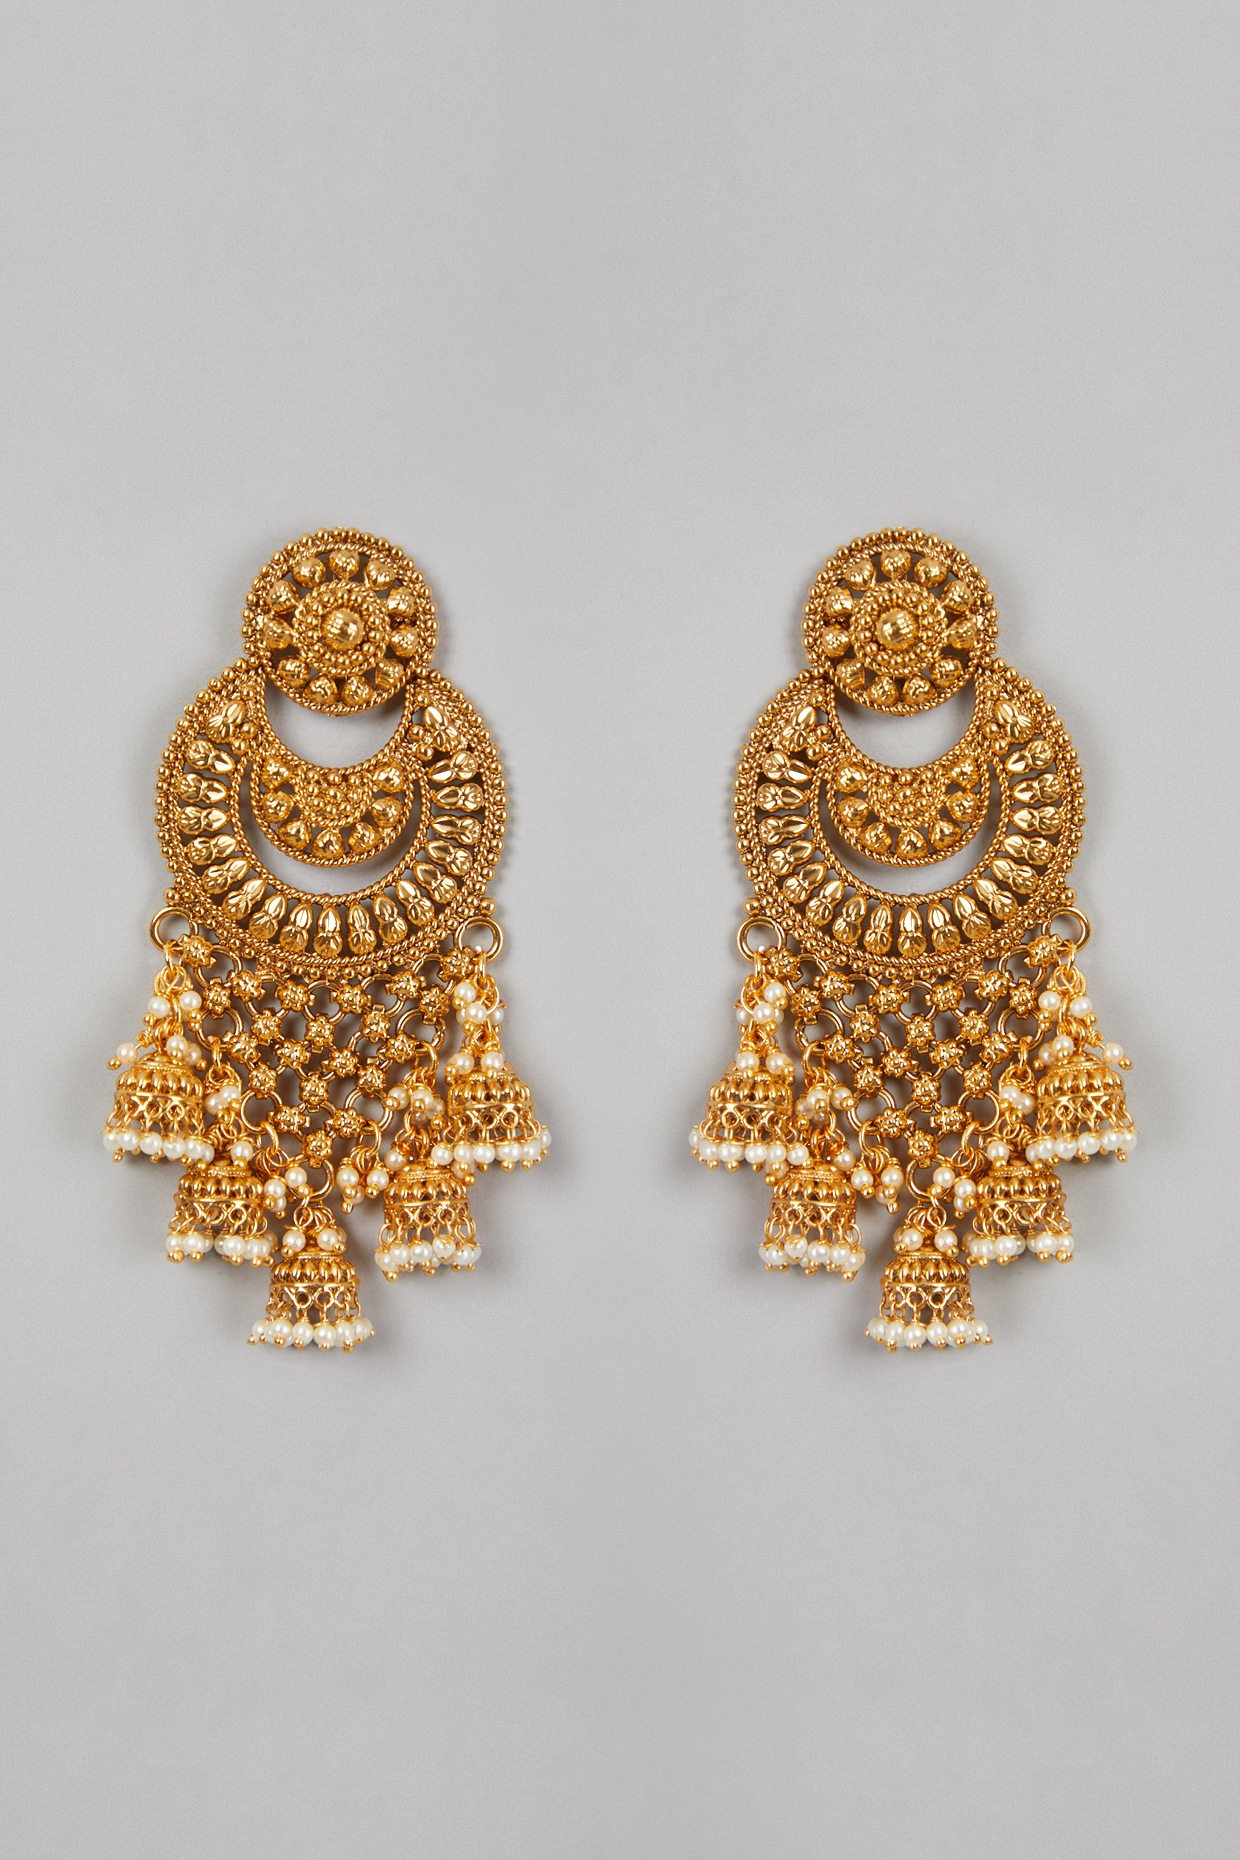 Tassel gold plated black crystal earrings at ₹1200 | Azilaa